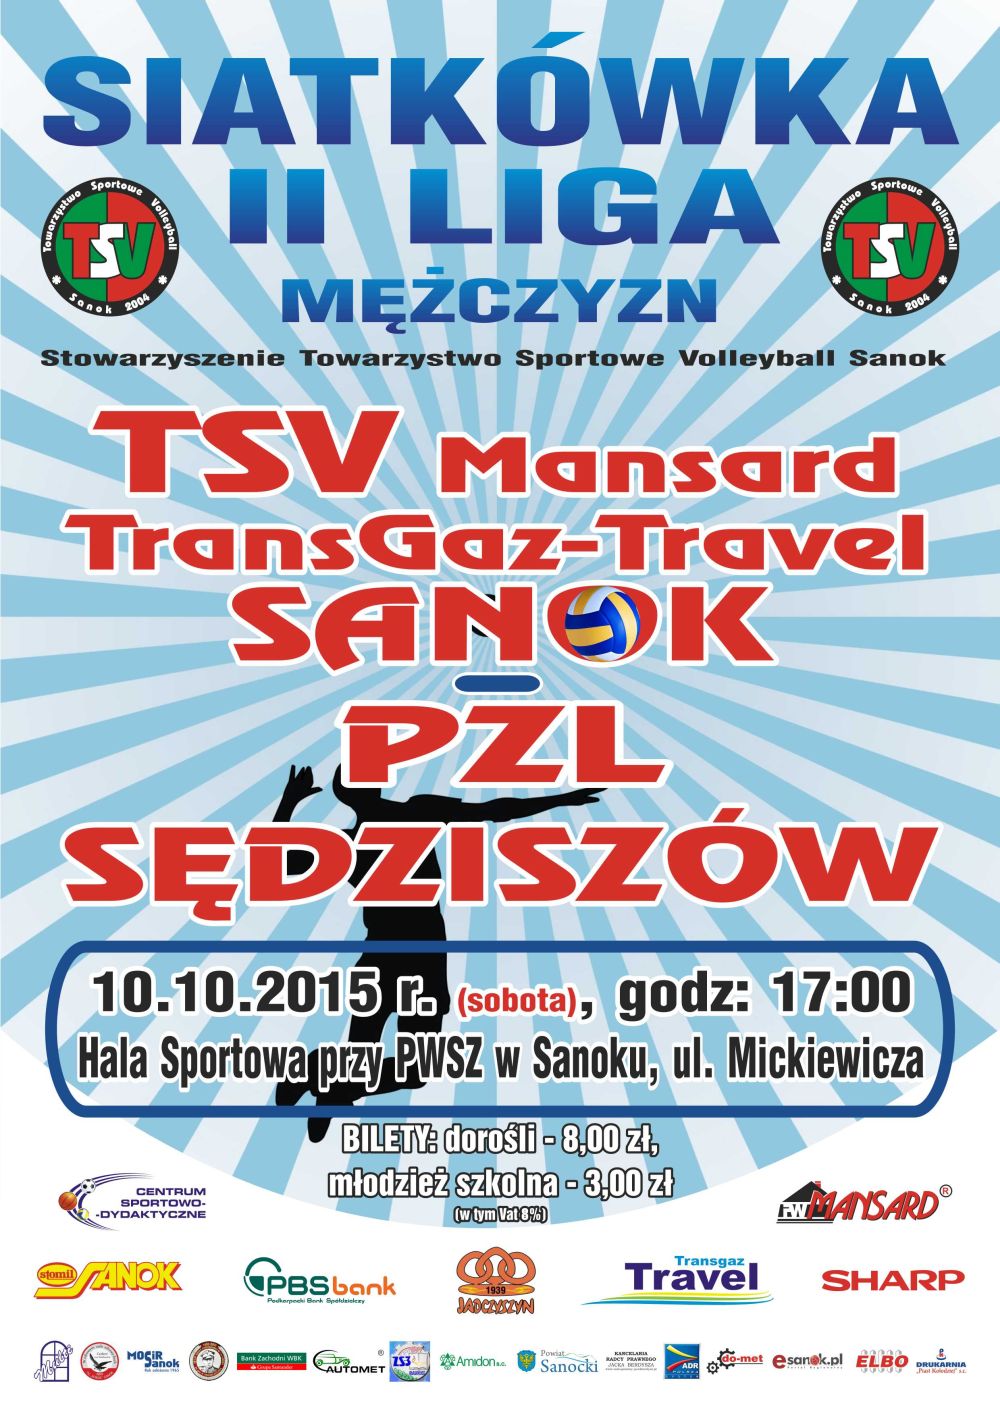 TSV Plakat A2_PZL Sedziszow